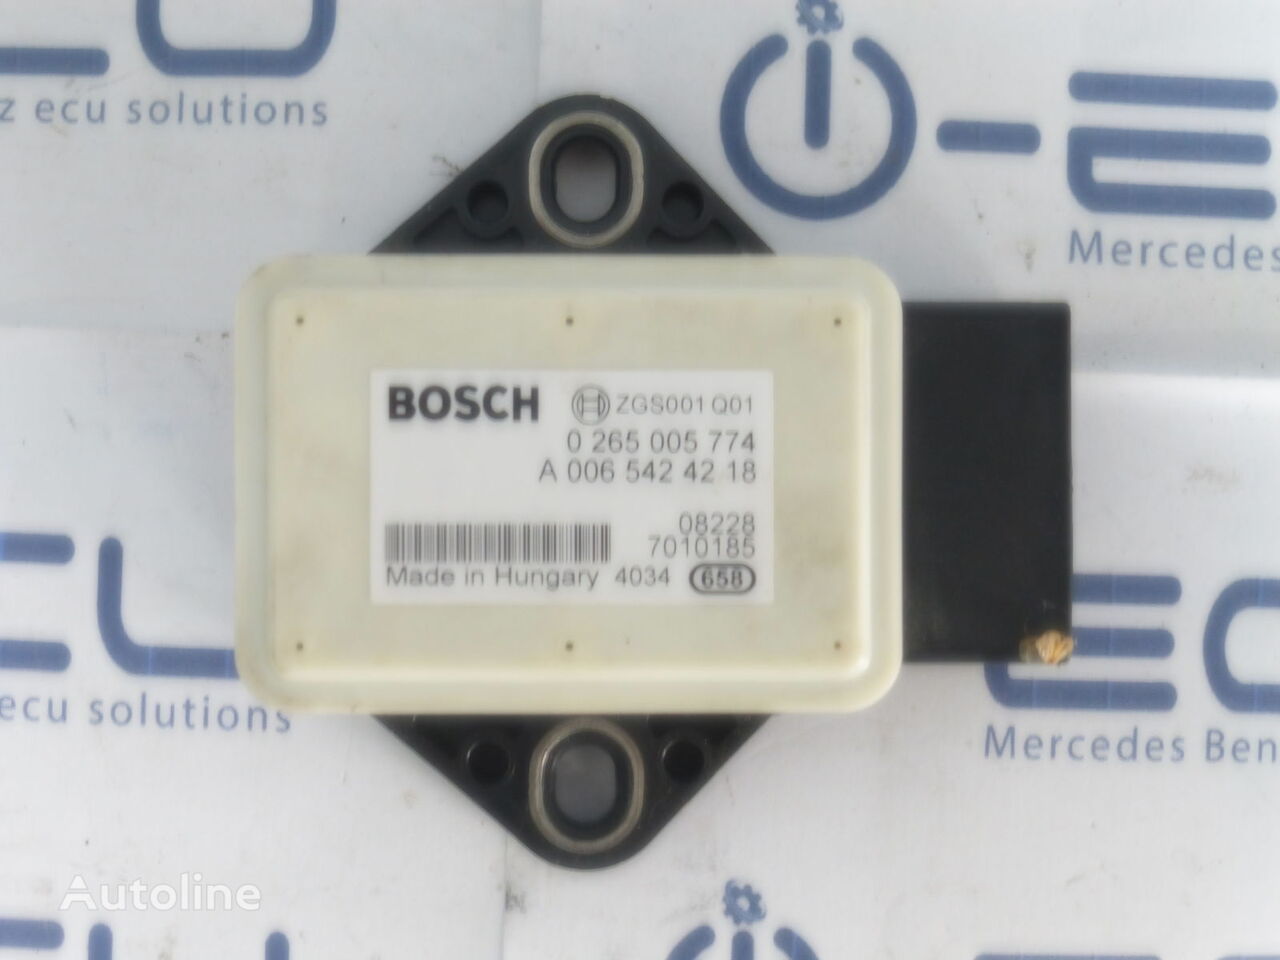 Bosch A 0065424218 control unit for Mercedes-Benz SPRINTER 906 truck